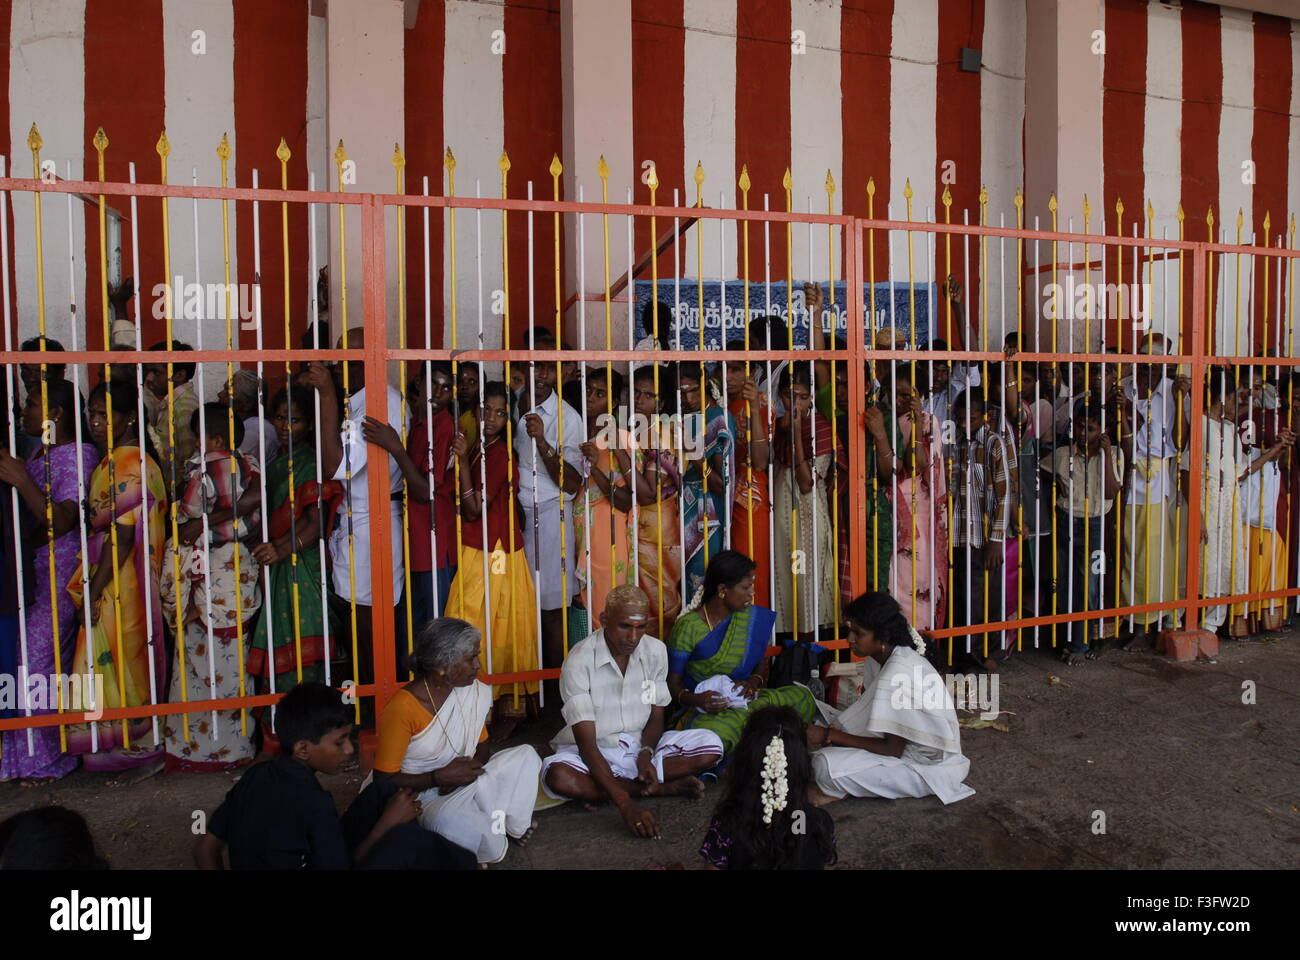 A queue of people waiting for darshan ; Palani ; Tamil Nadu ; India Stock Photo